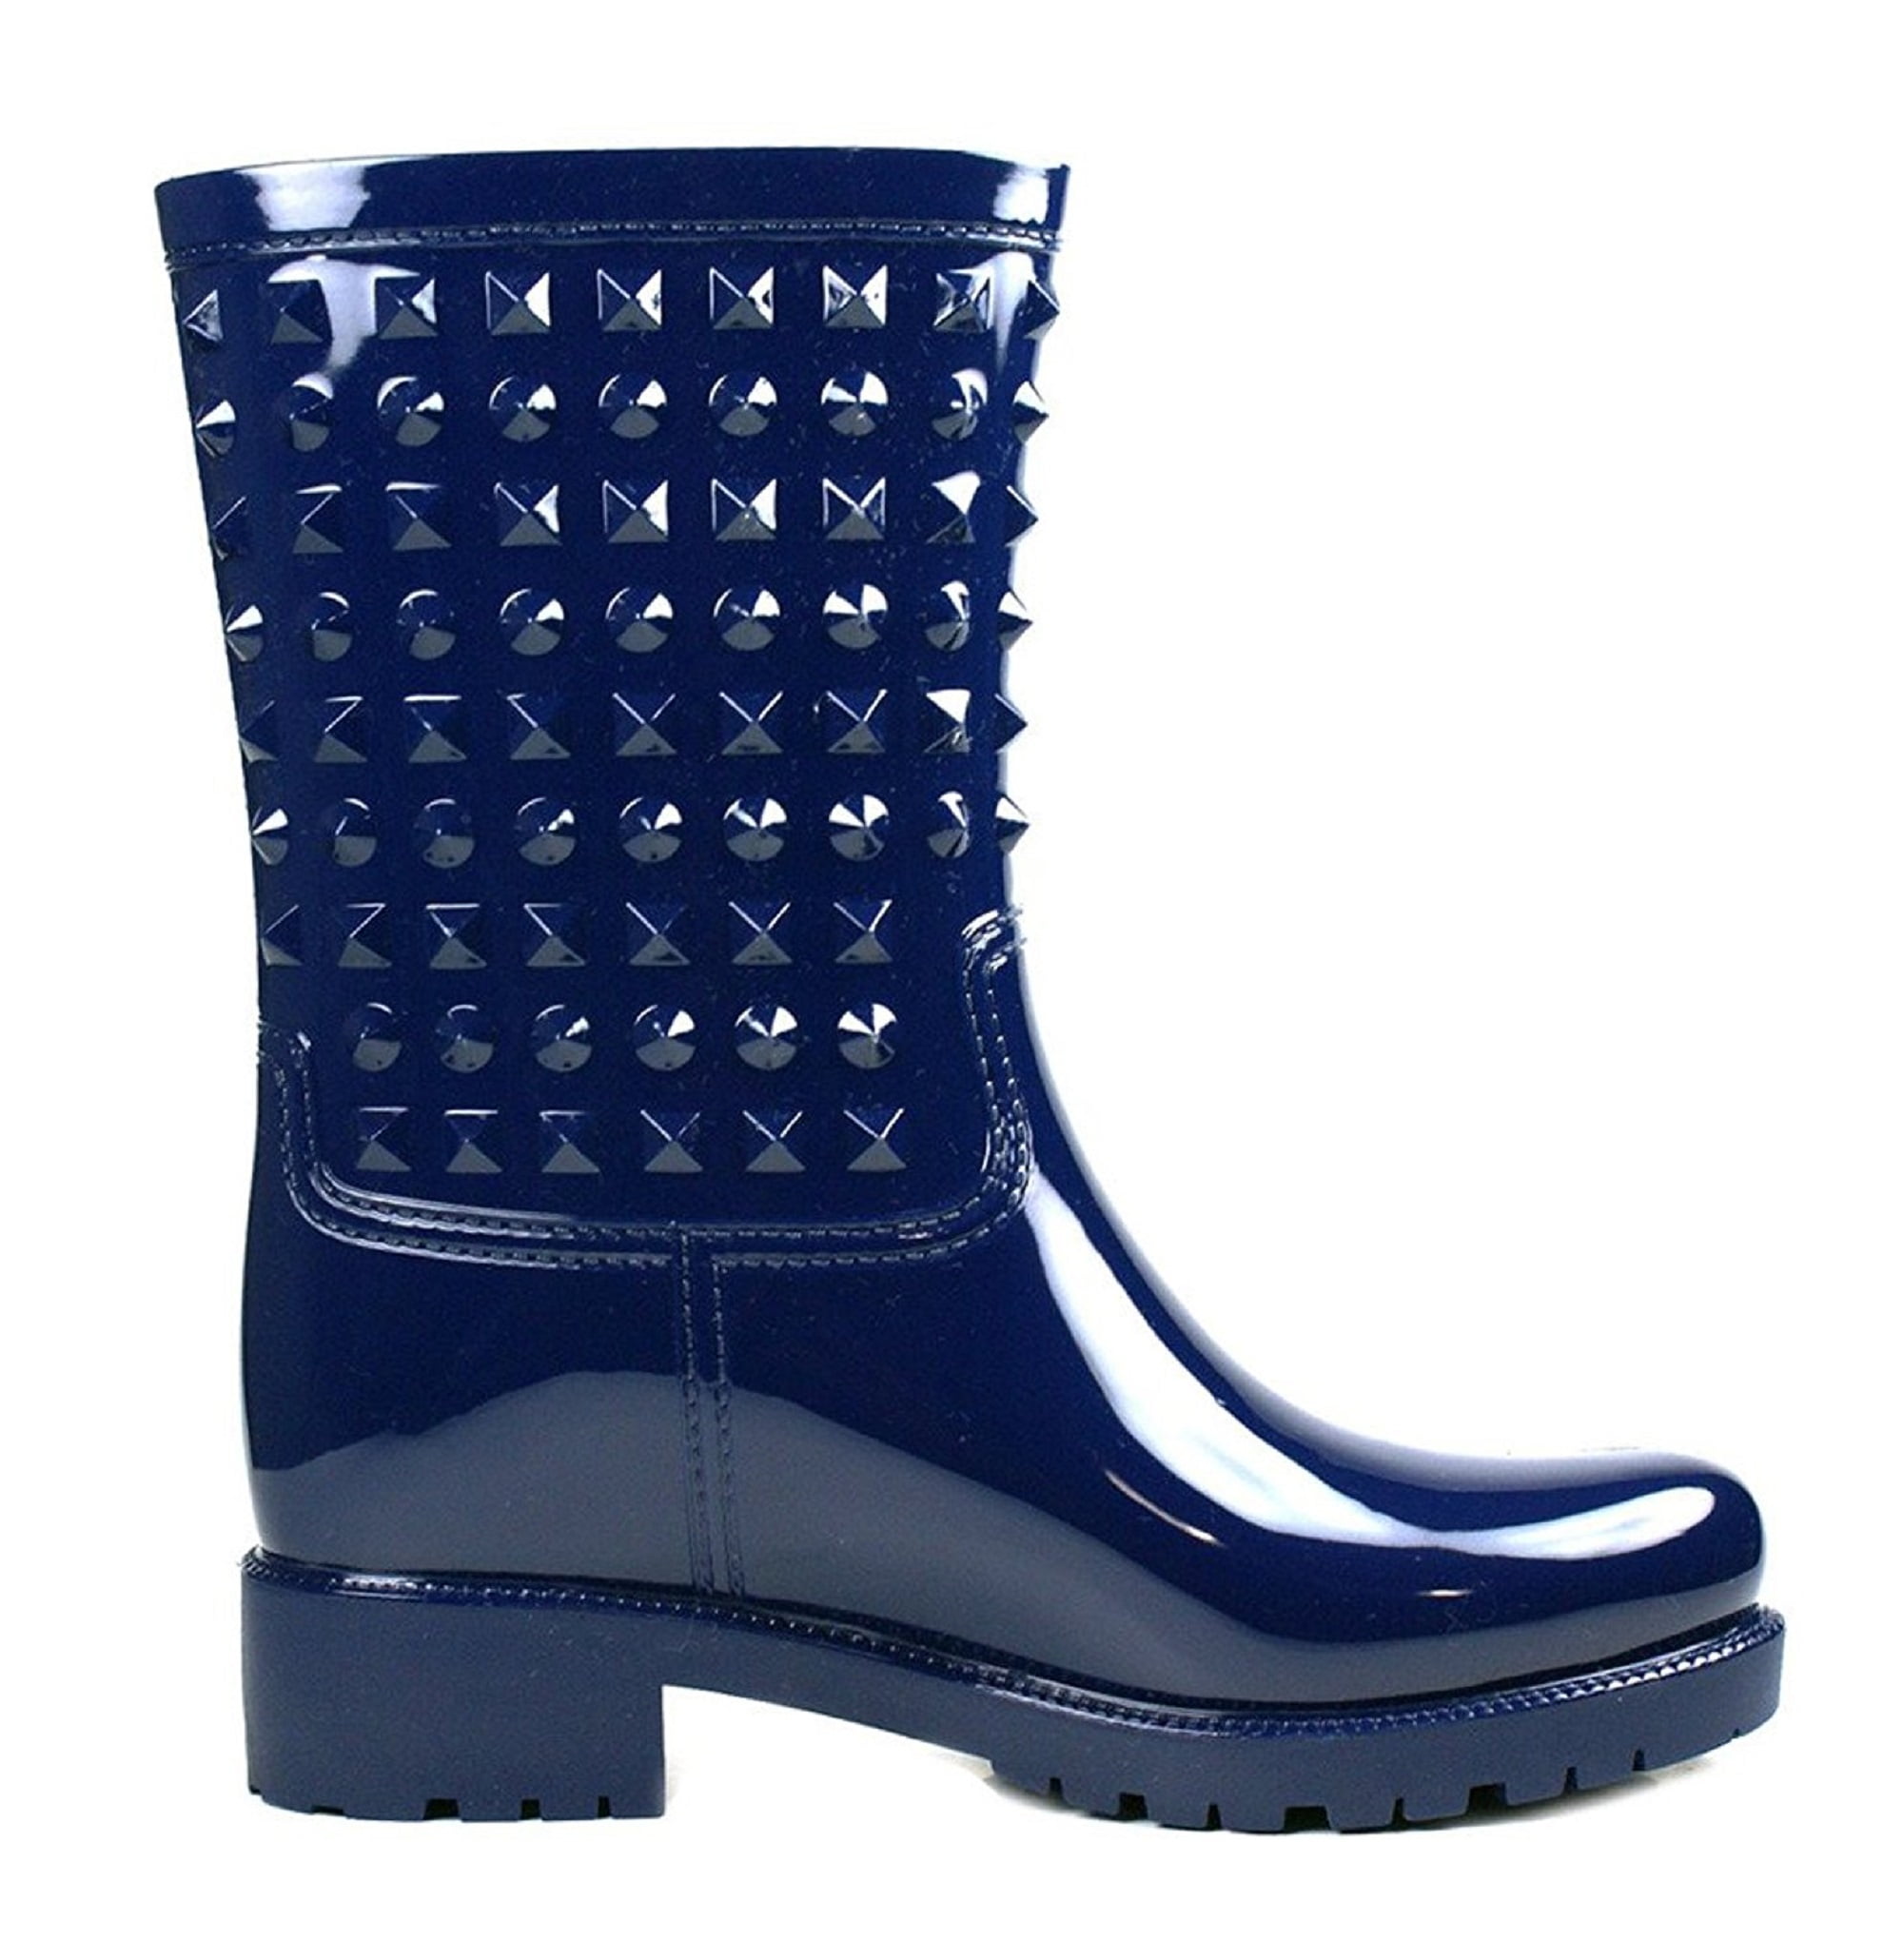 OwnShoe Womens Wellies Rubber Waterproof Snow Rain Boot Studded Midcalf ...